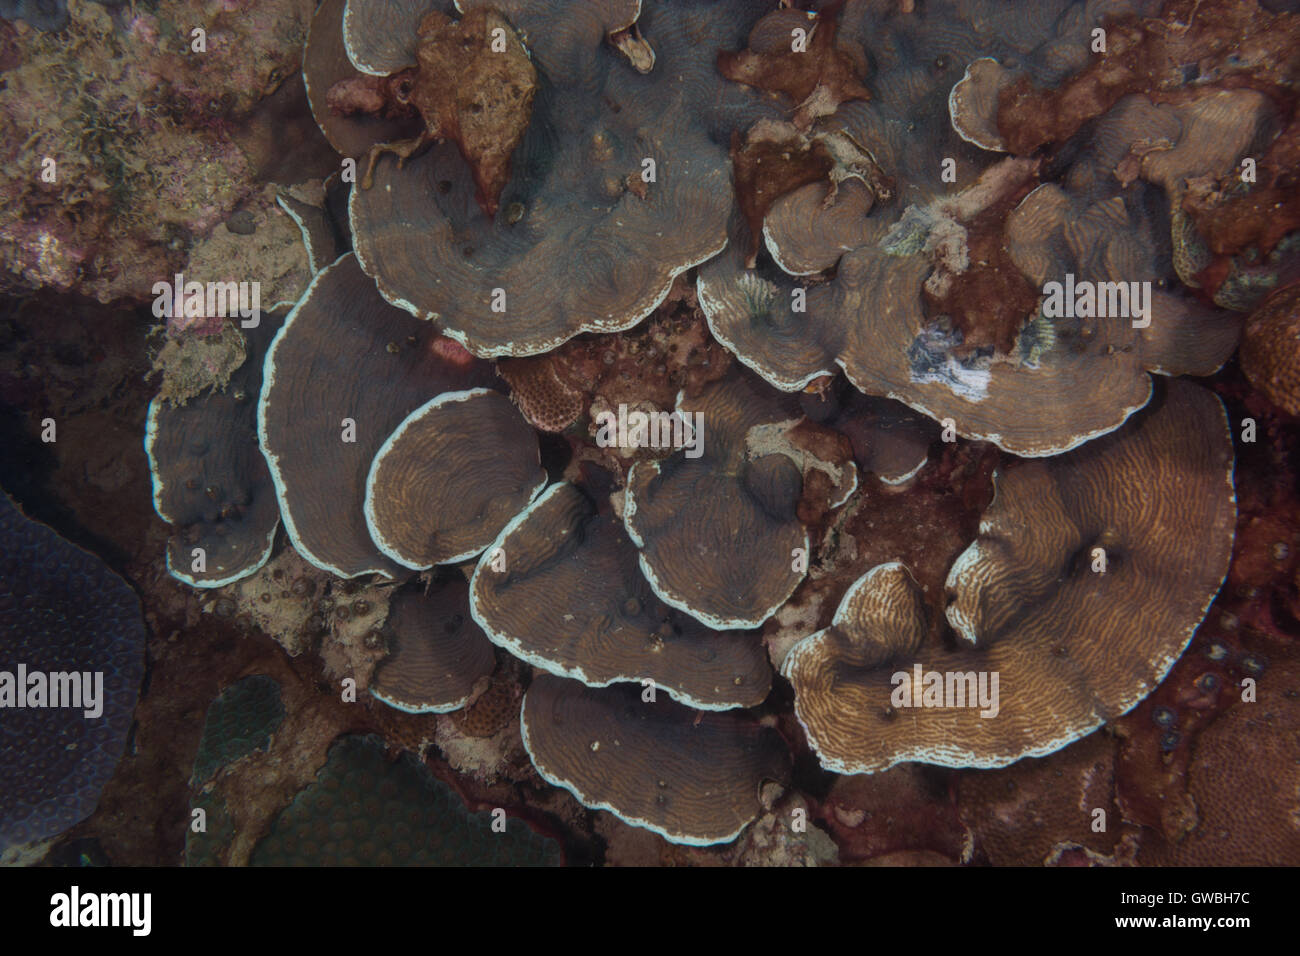 Reec coral genus Agaricia, underwater Abrolhos, Bahia, Brazil Stock Photo